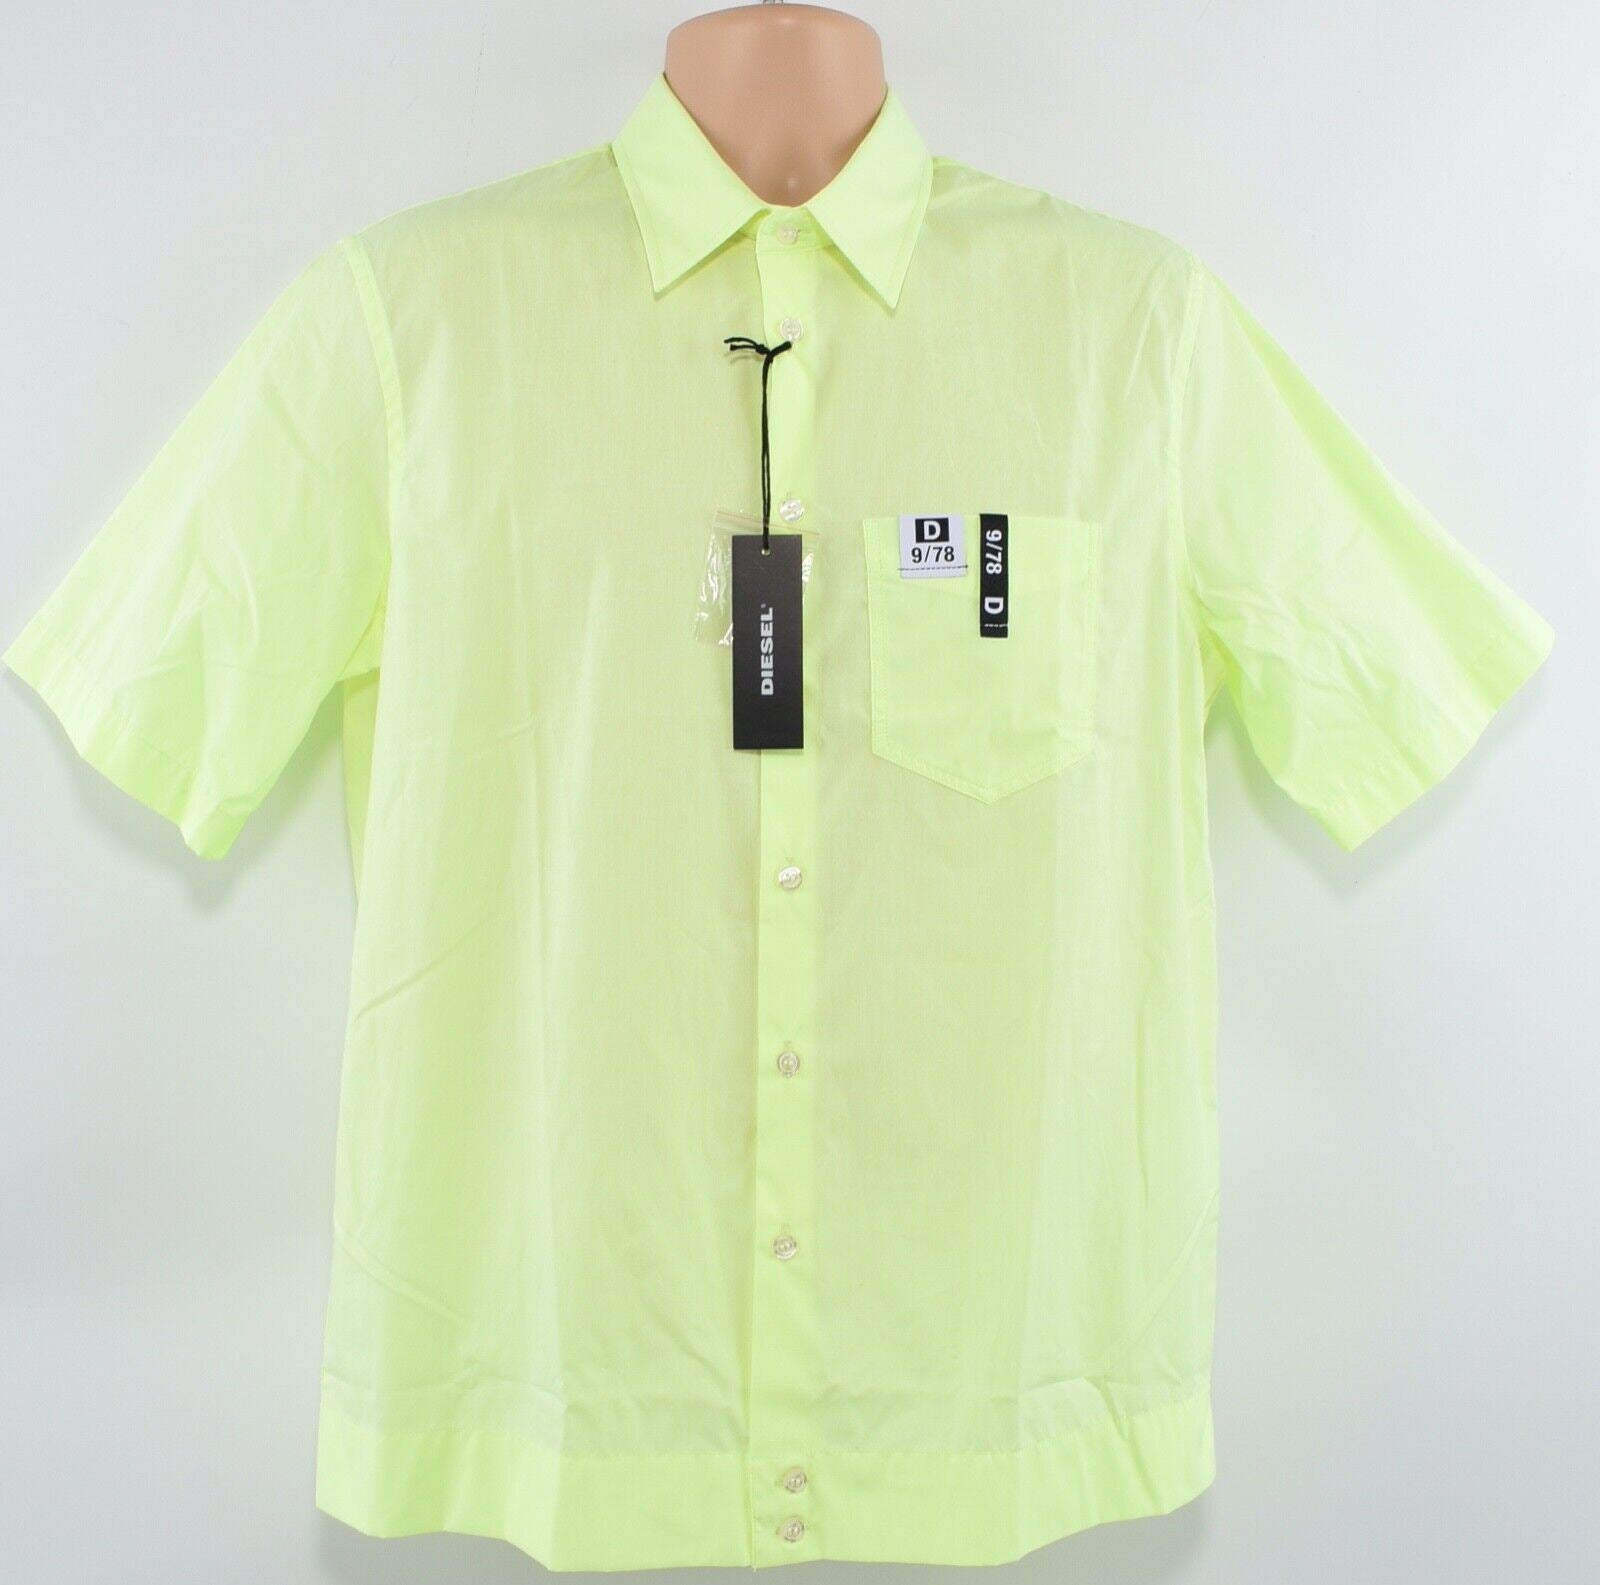 DIESEL Men's S-FRY Short Sleeve Shirt, Fluo Green, size S